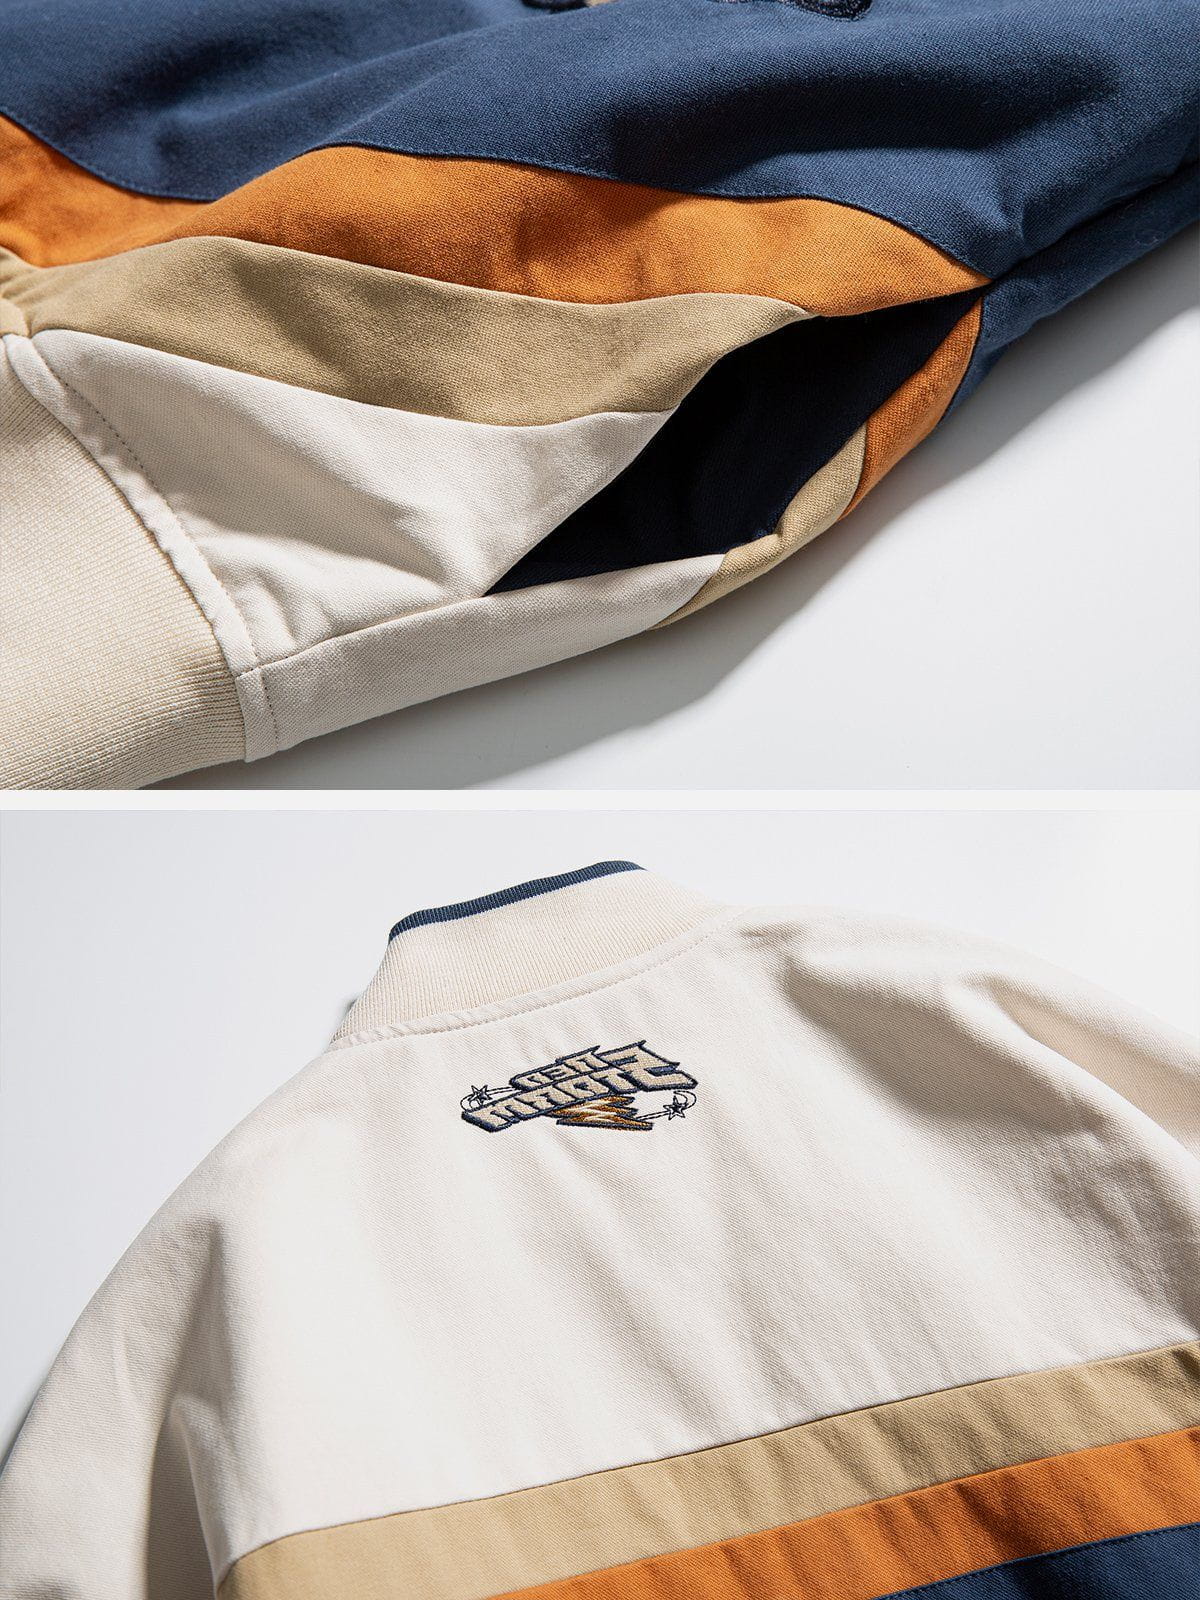 Majesda® - Vintage Embroidered Motorcycle Jacket outfit ideas, streetwear fashion - majesda.com